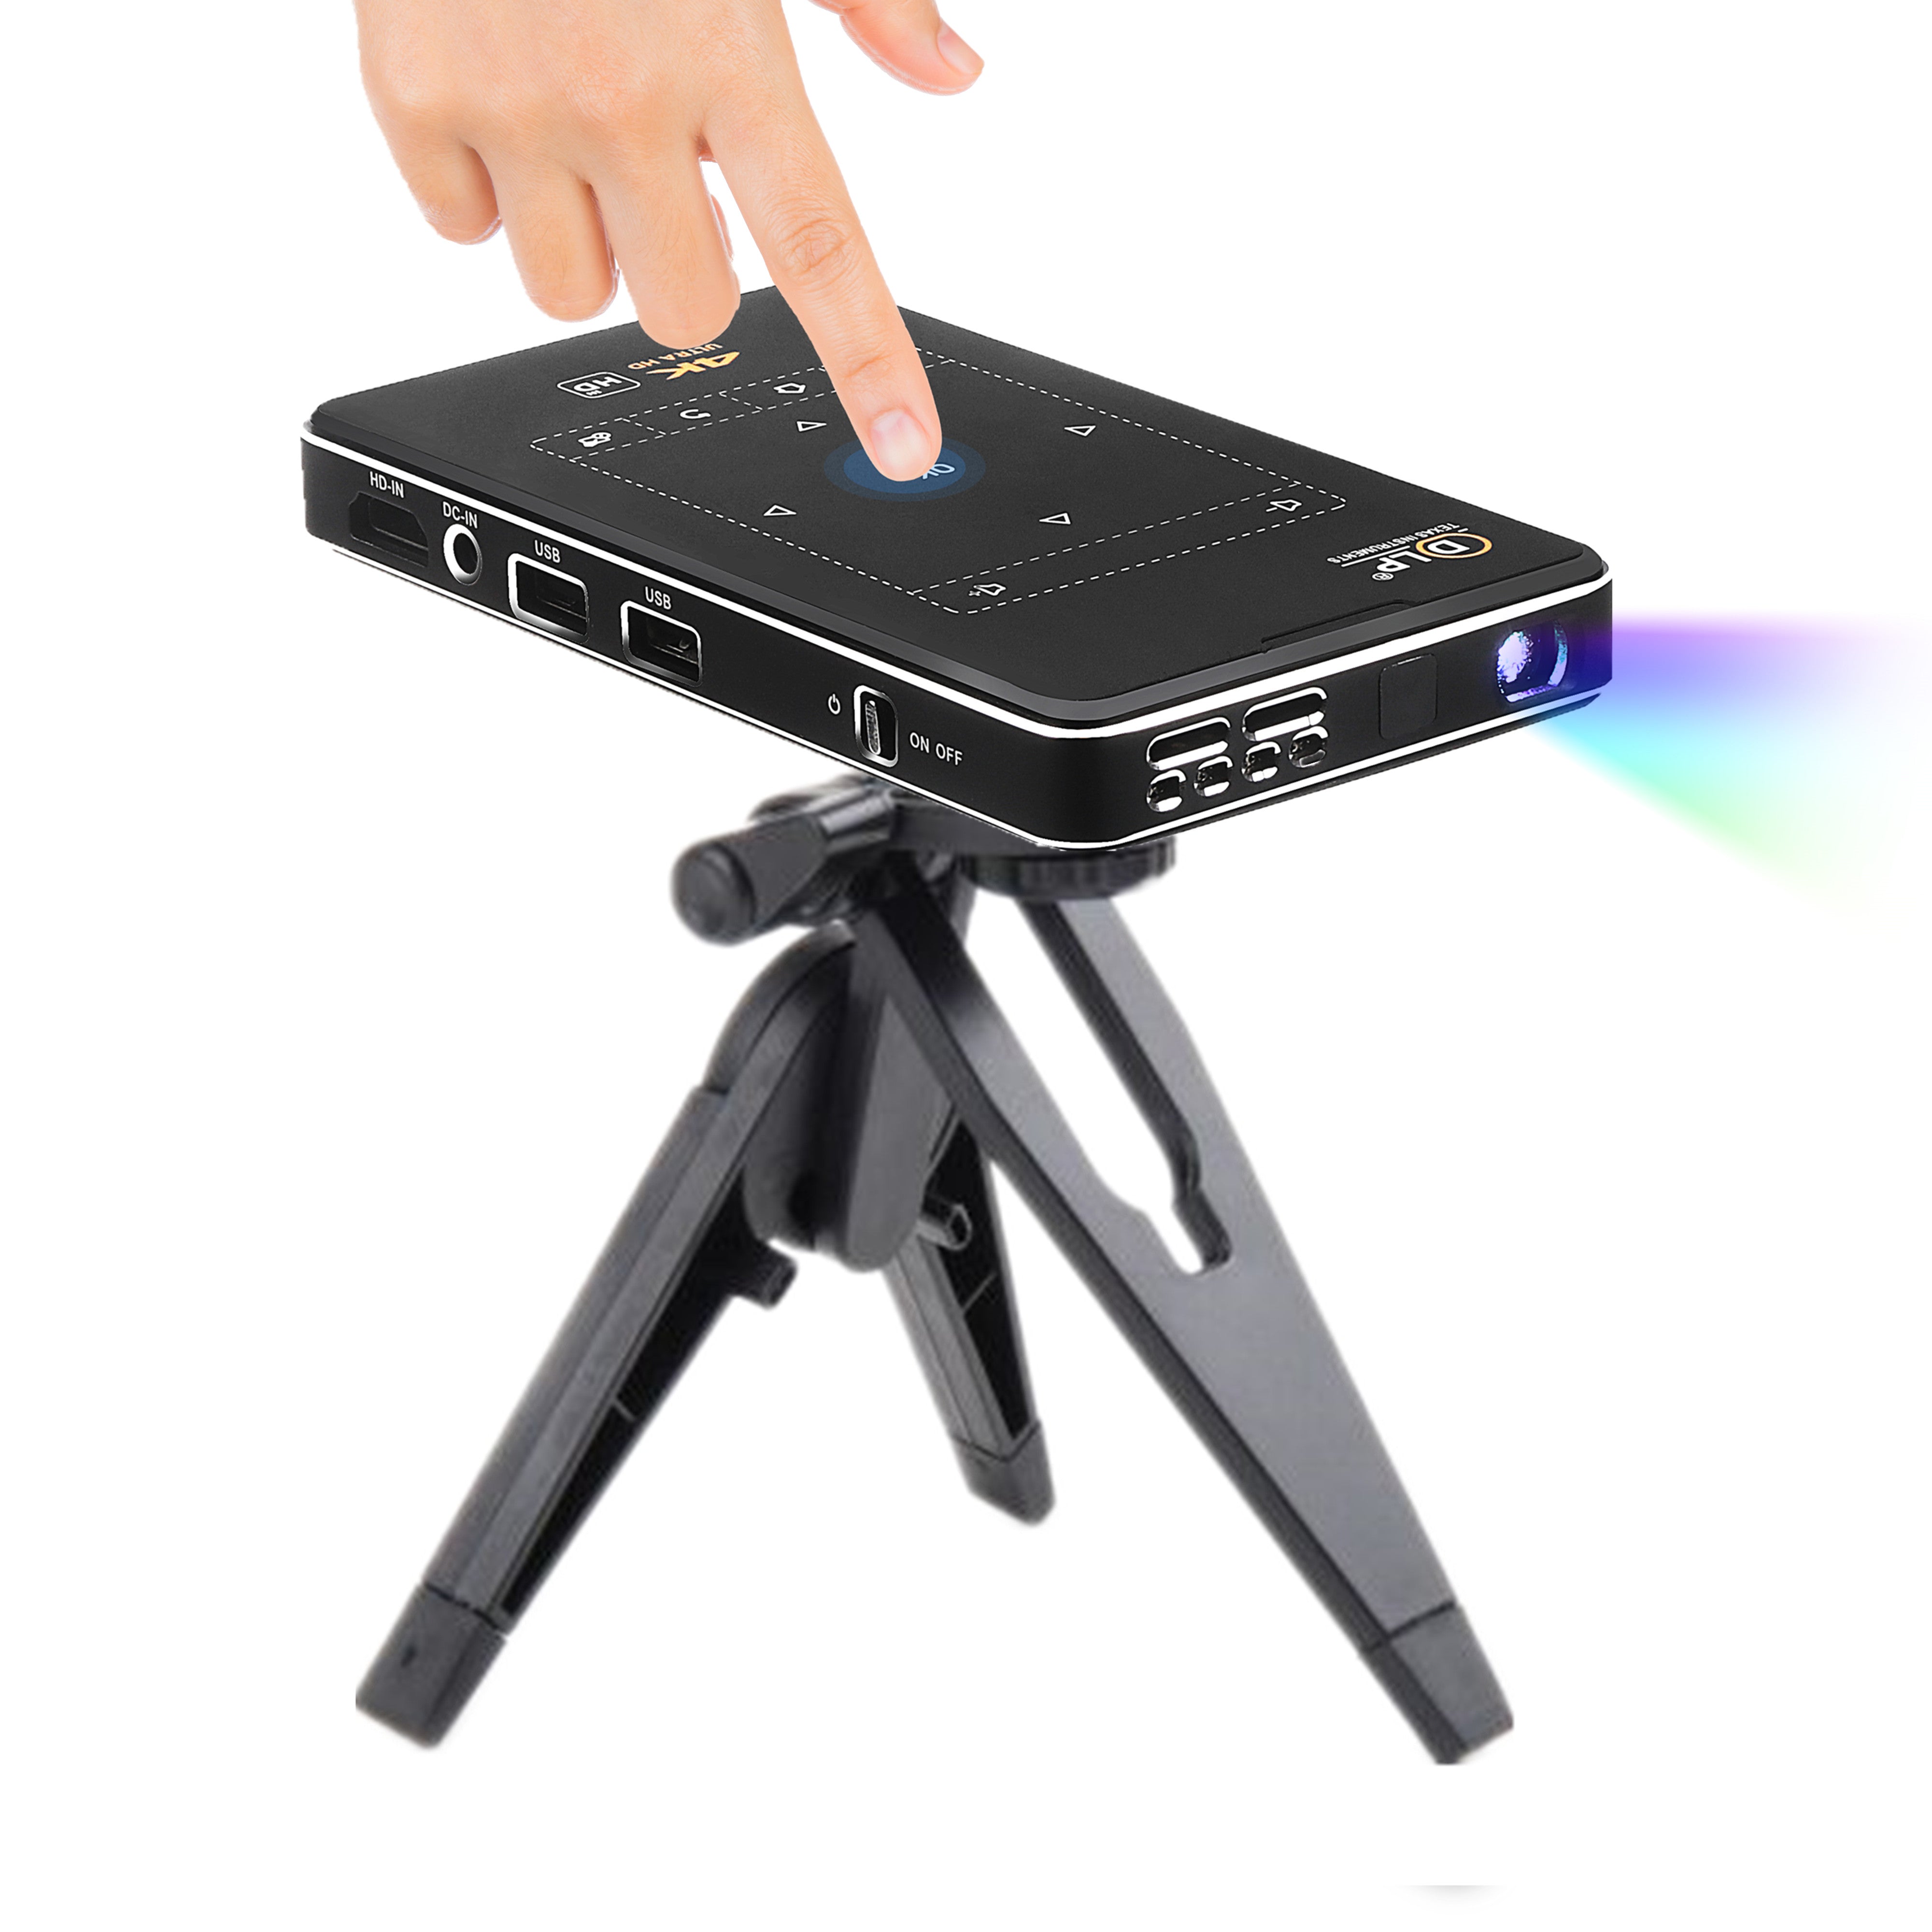 4k ultra HD portable projector